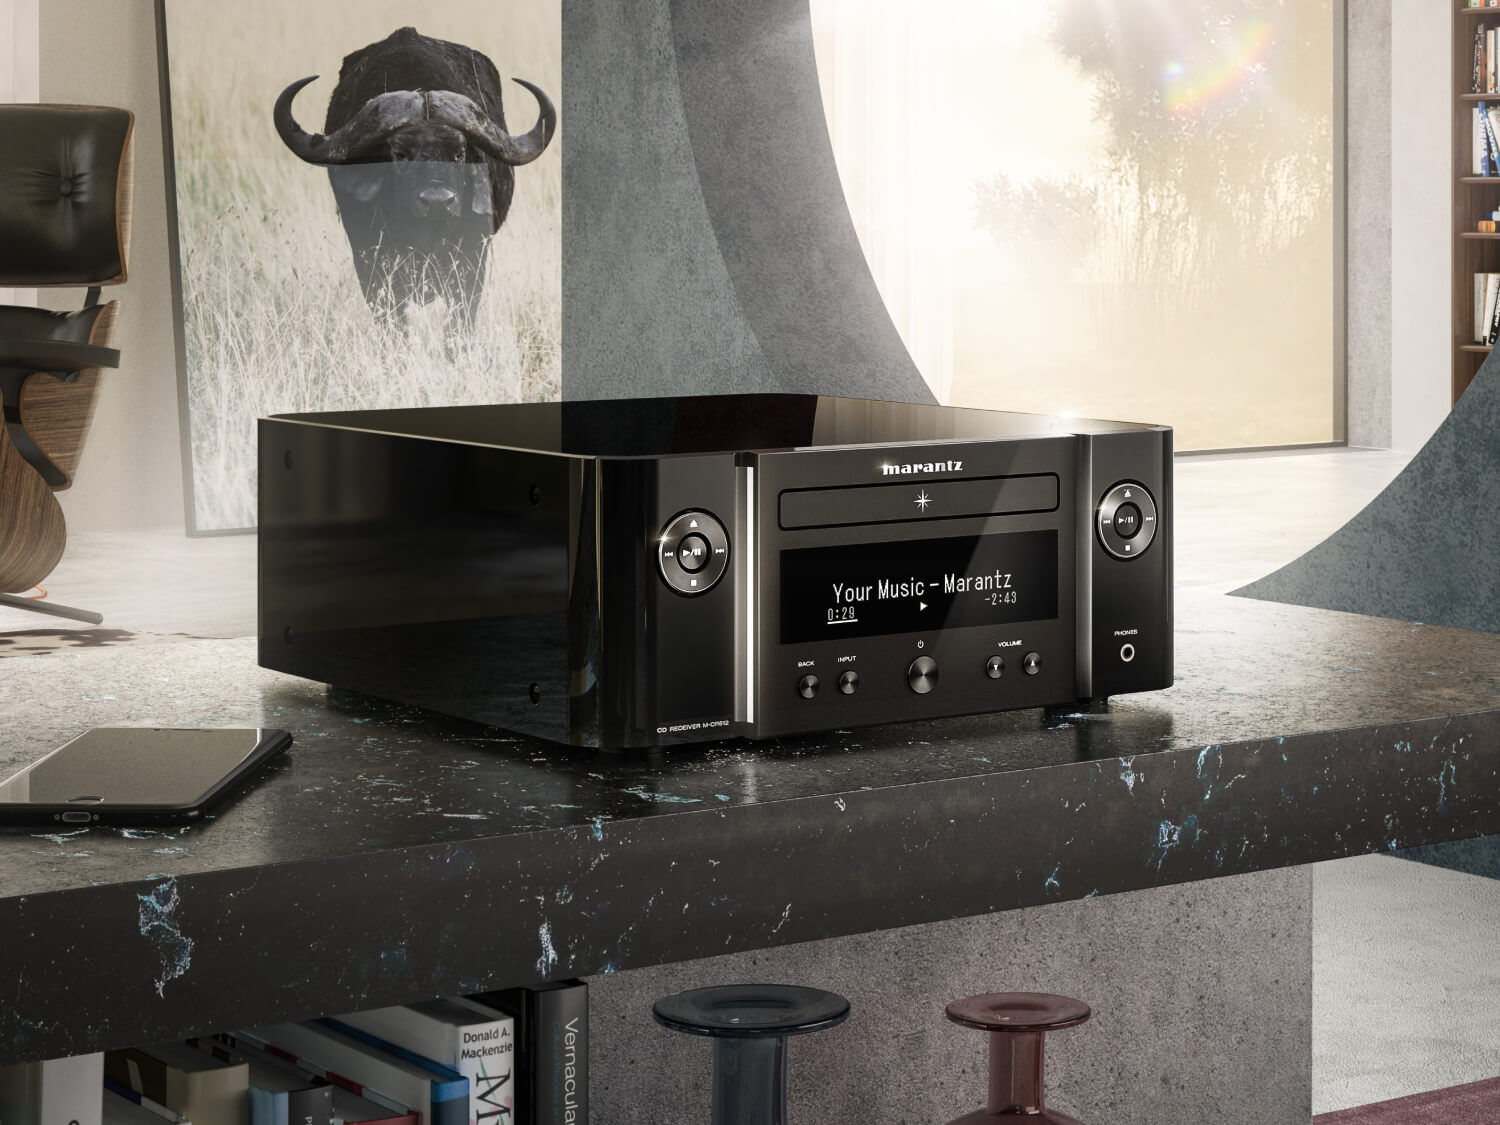 Marantz™ CD Players | Experience High Quality Home Audio